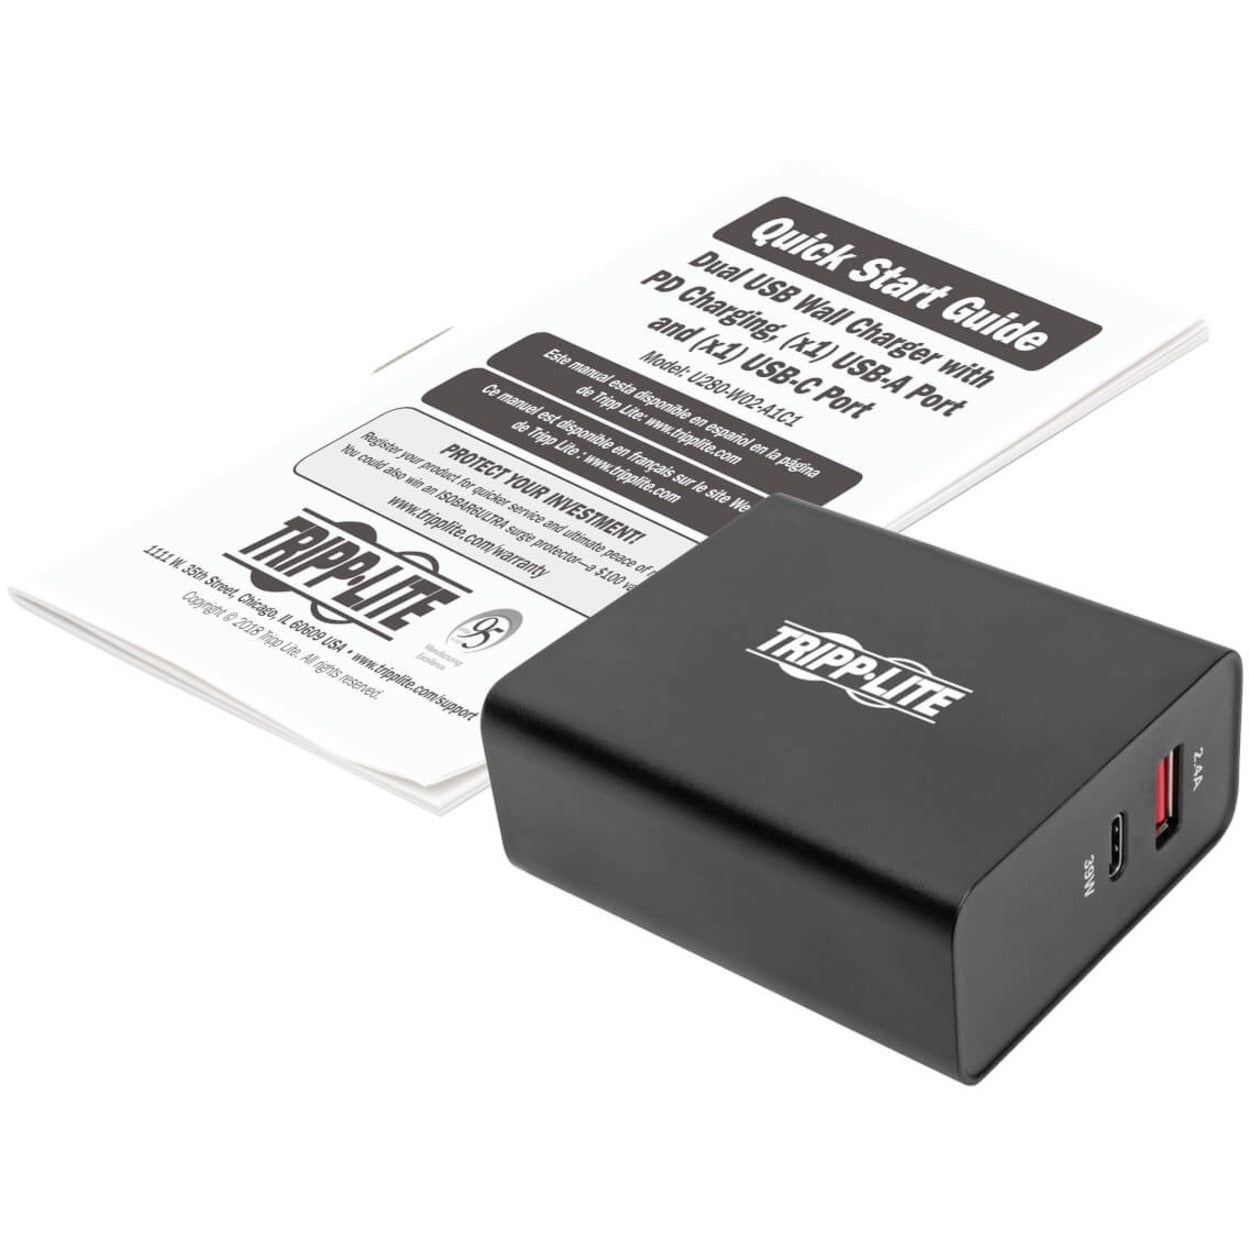 Tripp Lite U280-W02-A1C1 AC Adapter, 2PT USB Wall Charger with USB Type C, 51W Power, 2 Year Warranty